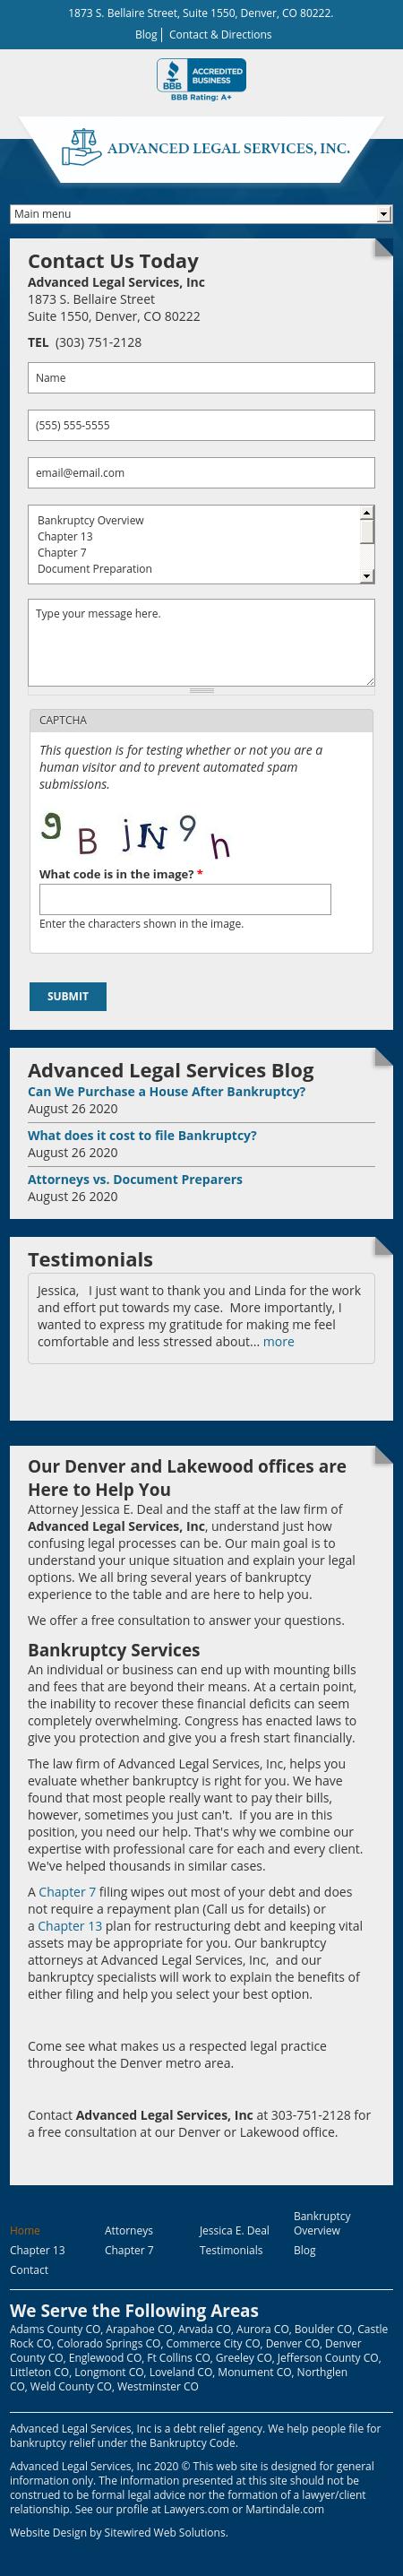 Kenneth Brock Law Office - Denver CO Lawyers